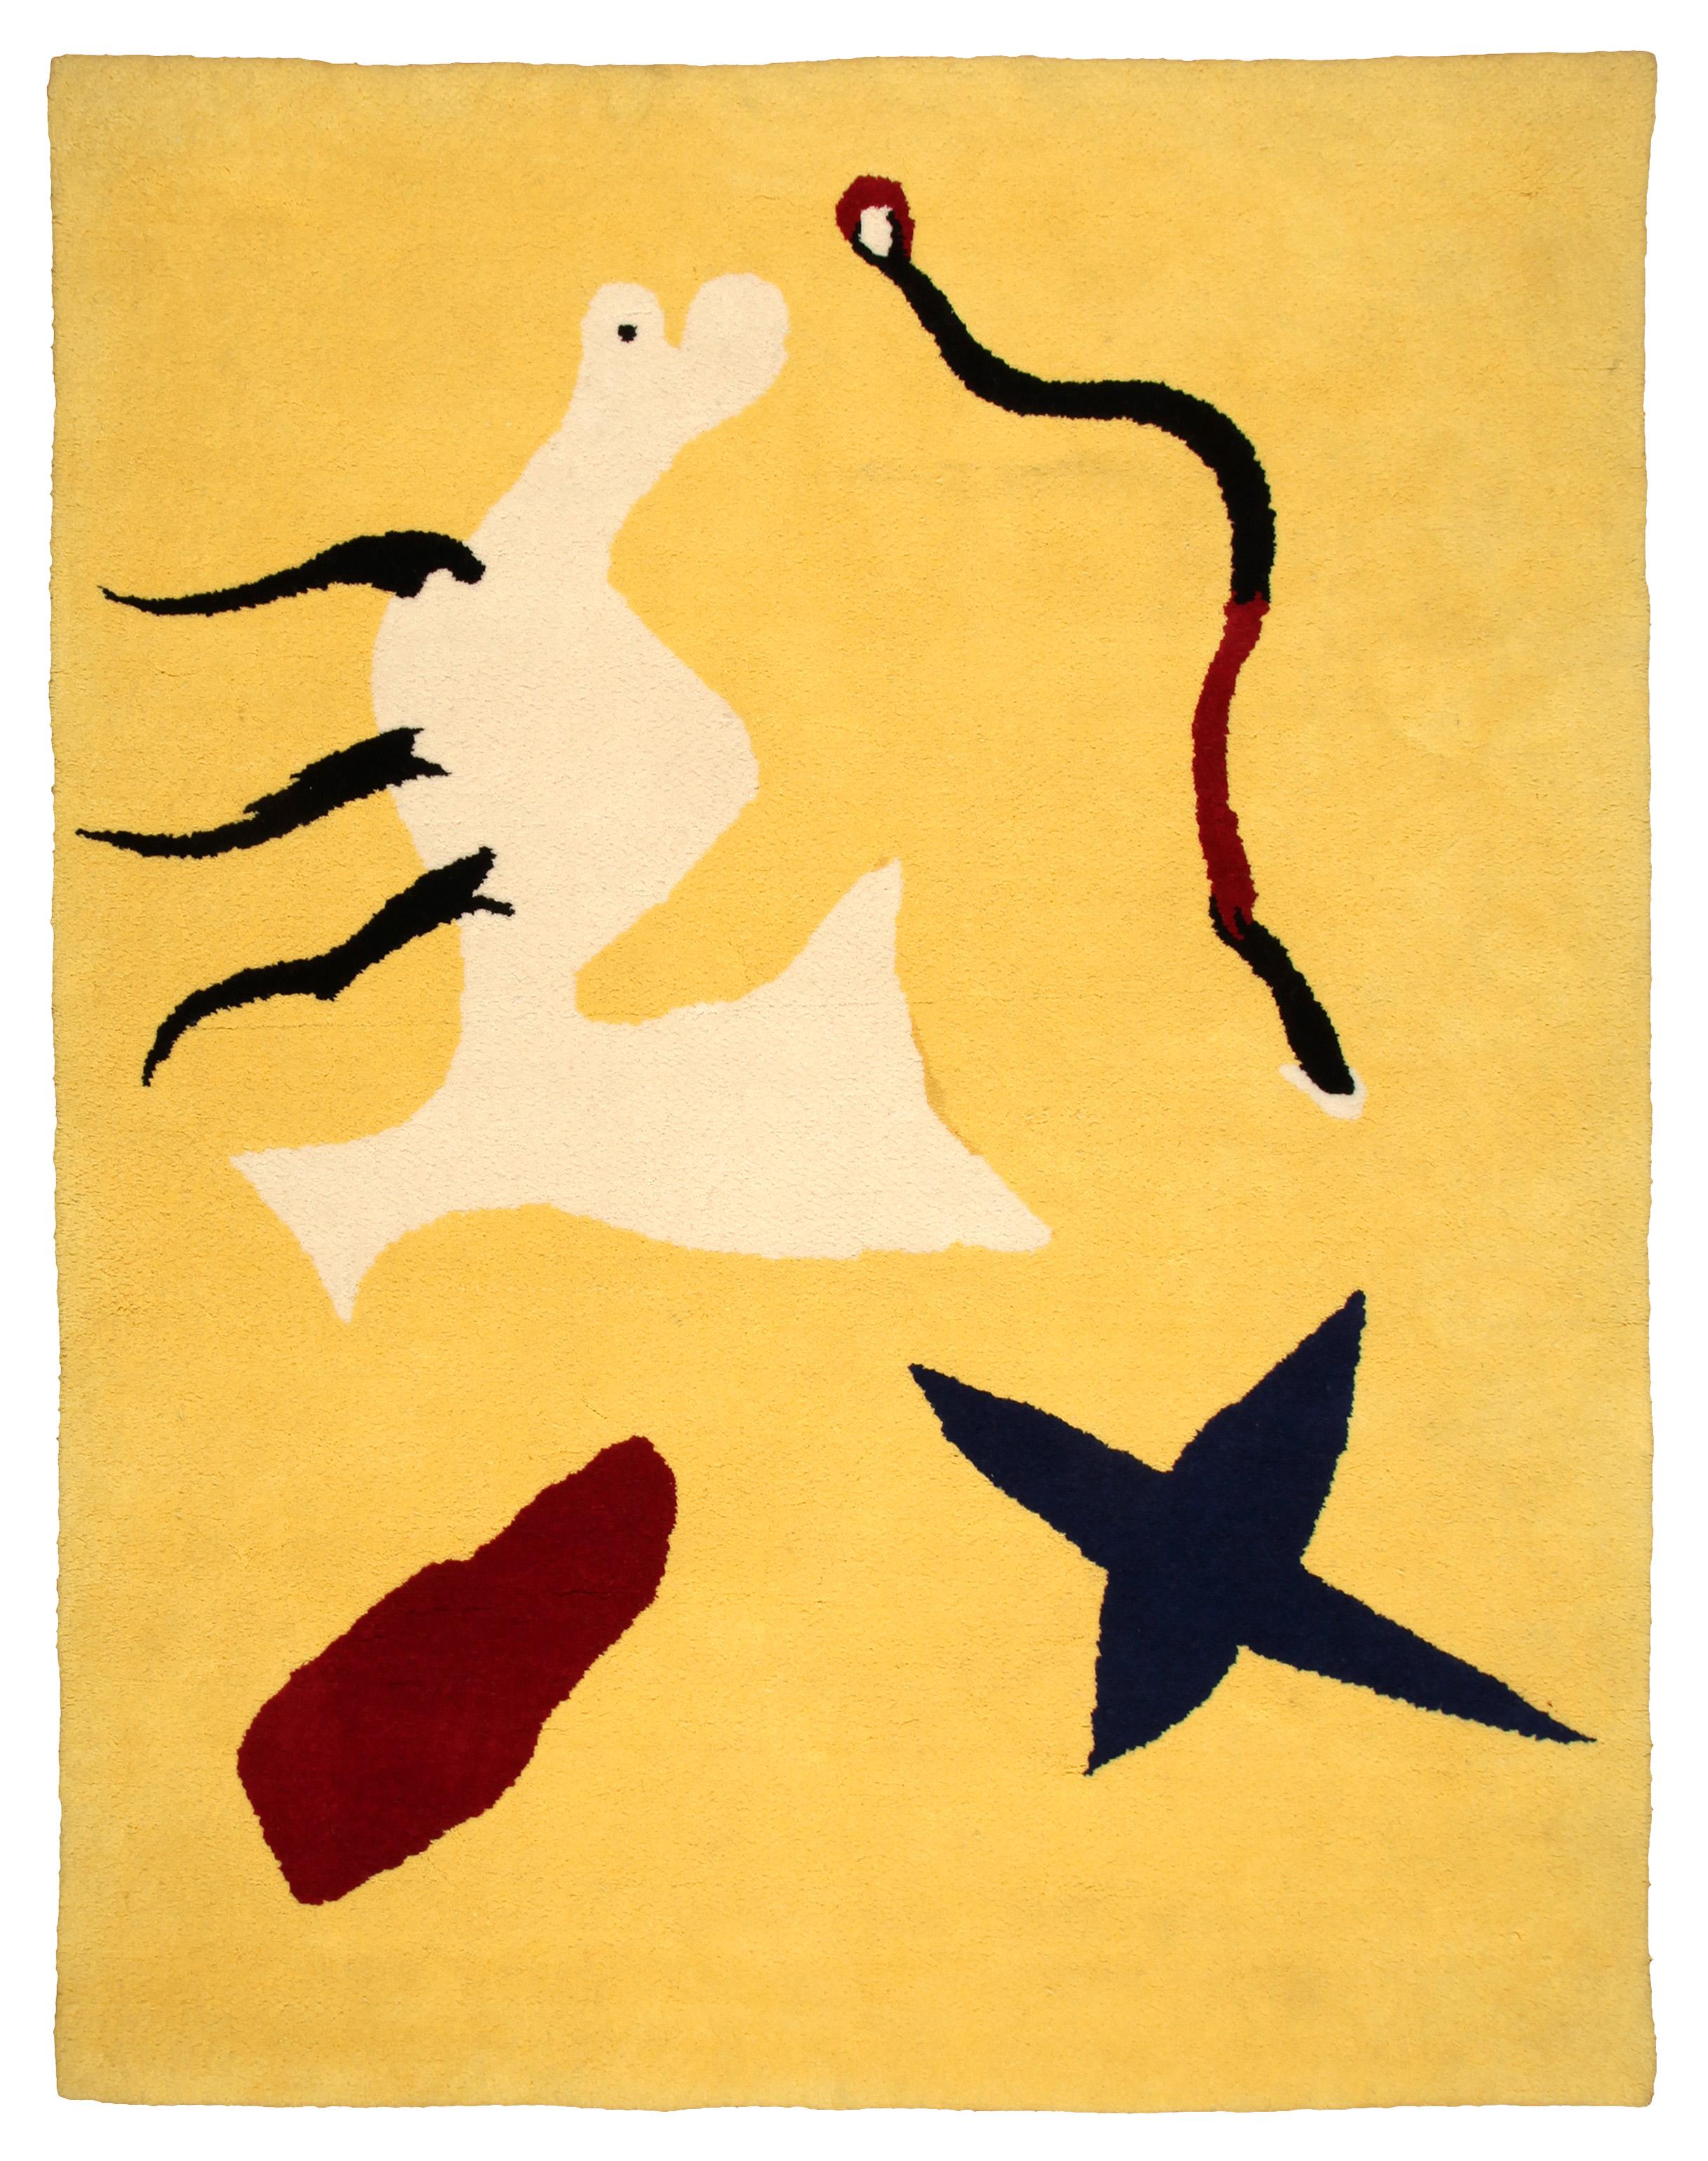 Vintage Mangouste Carpet by Joan Miró, 1961, Provenance Galerie Beyeler - Mixed Media Art by (after) Joan Miró